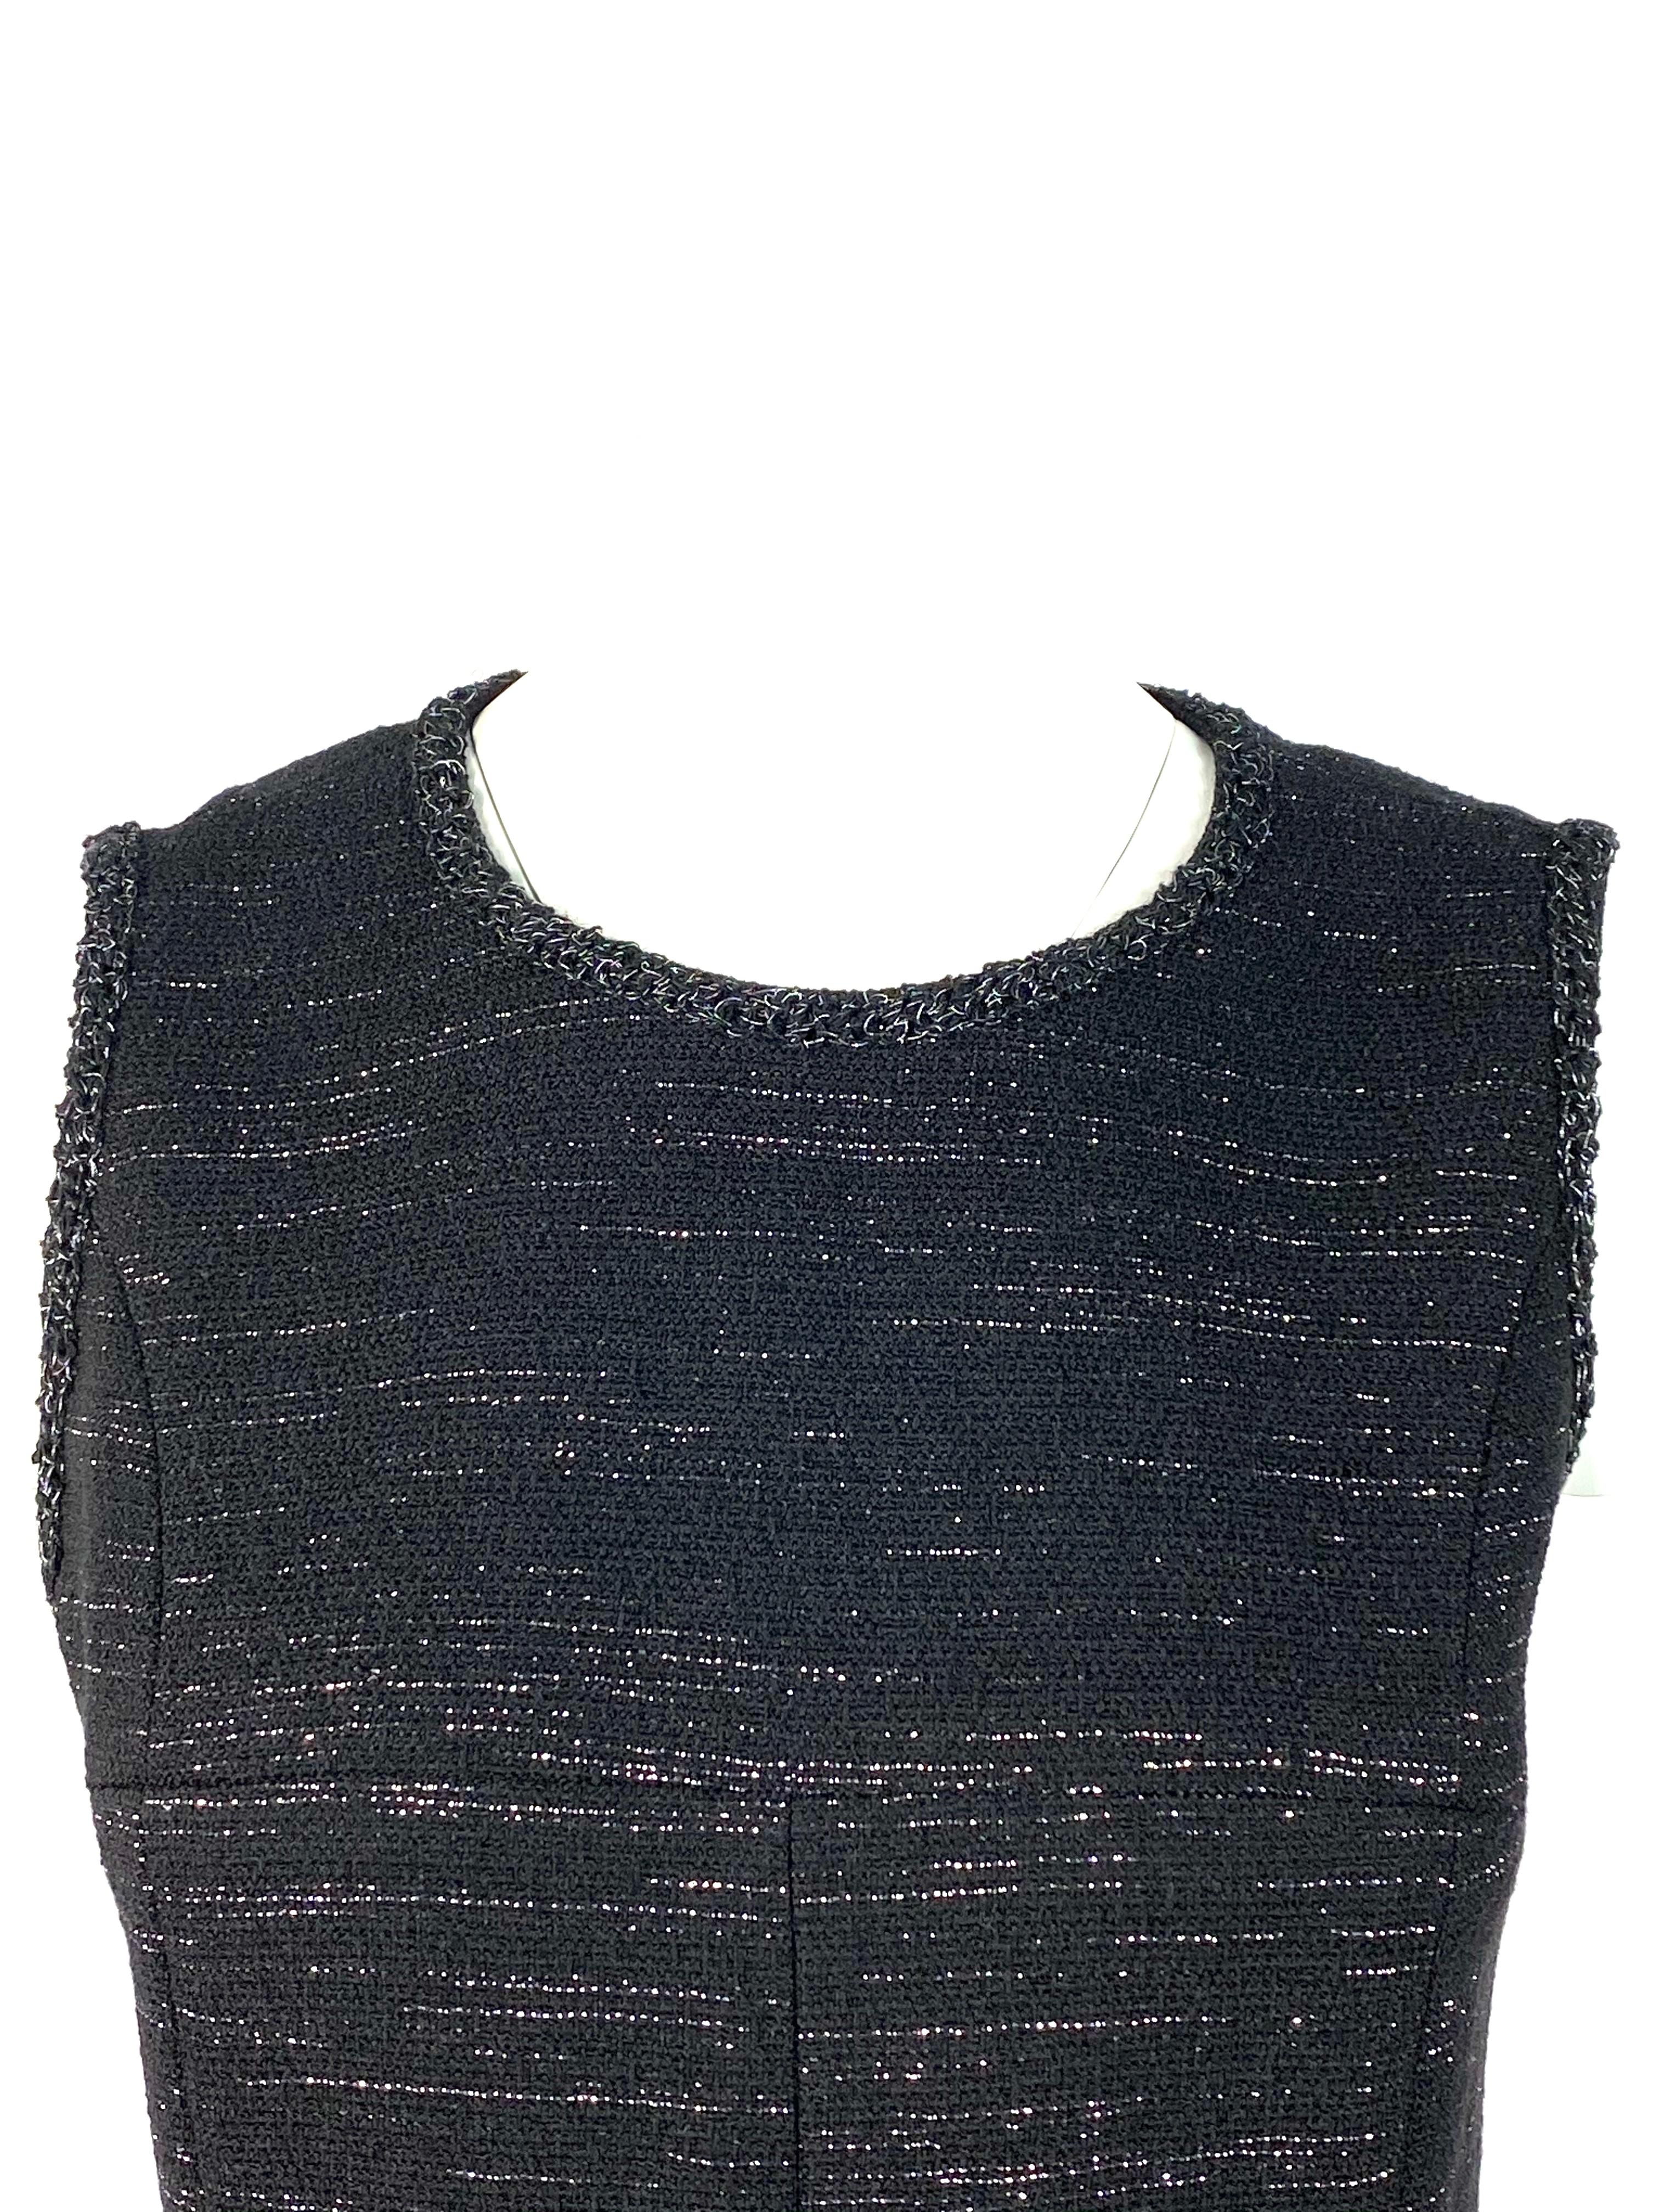 Chanel Black Tweed and Metallic Sleeveless Midi Dress Size 40 For Sale ...